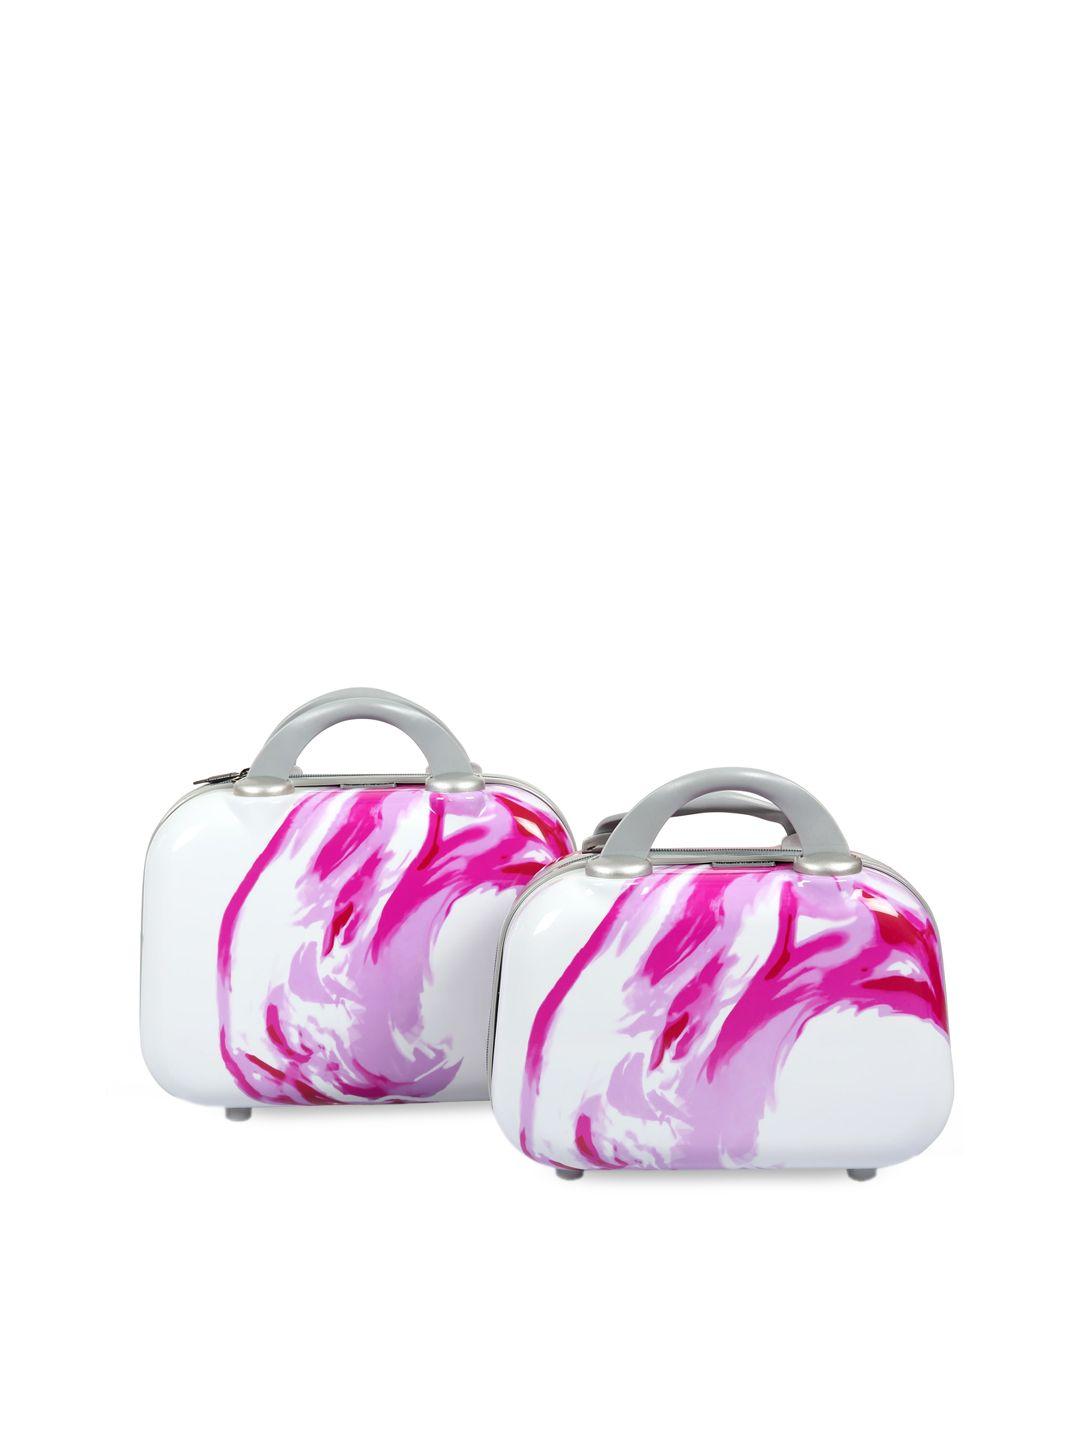 polo class set of 2 pink printed travel luggage vanity bag